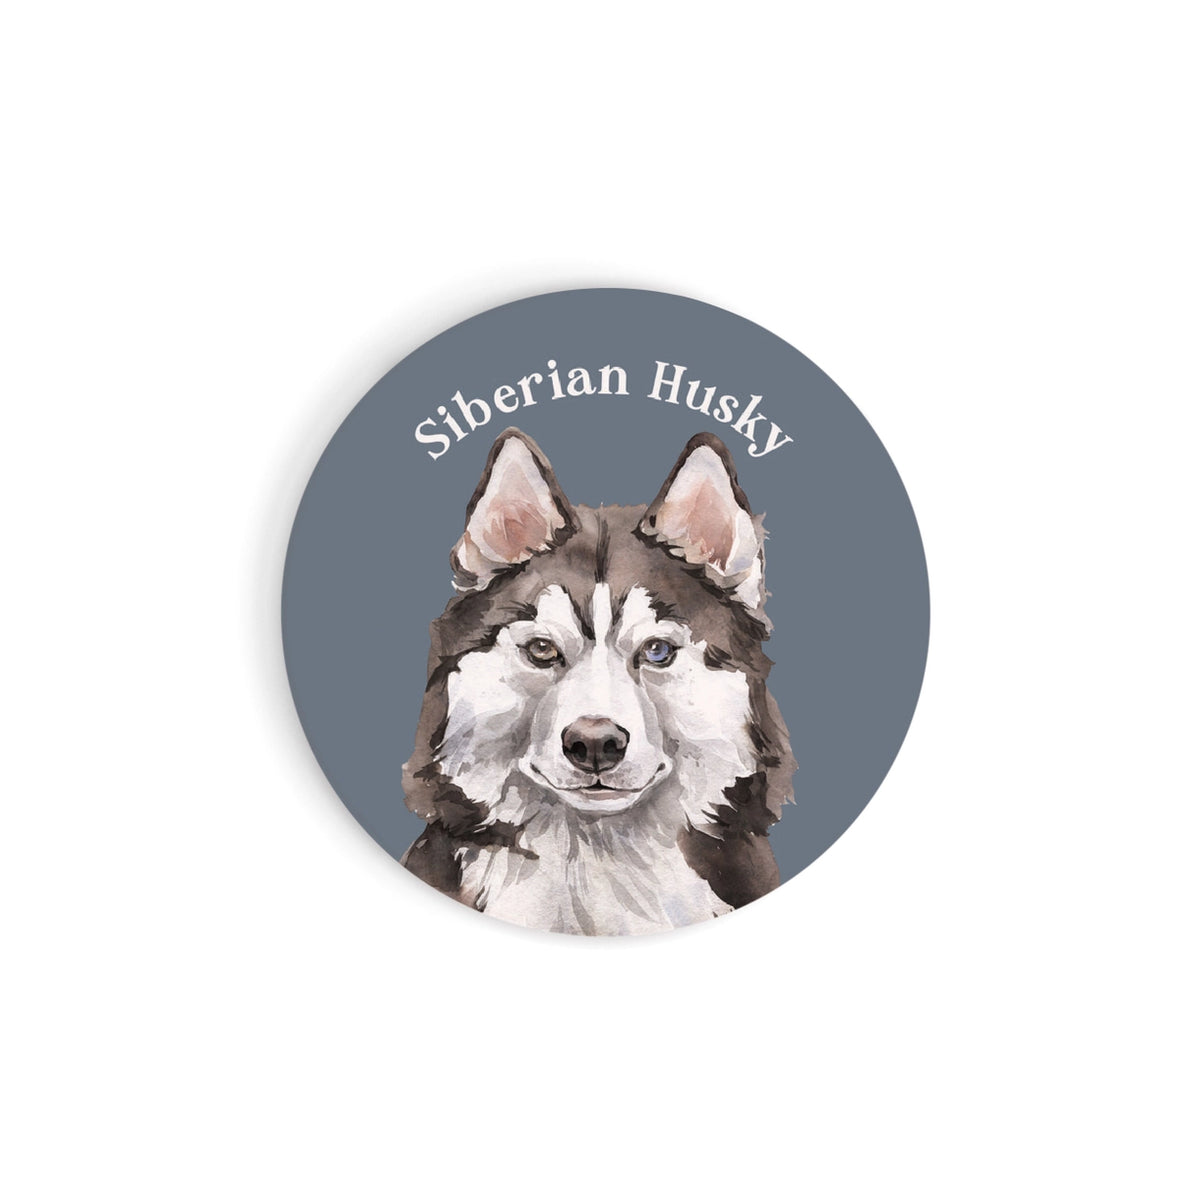 Siberian Husky Car Coaster